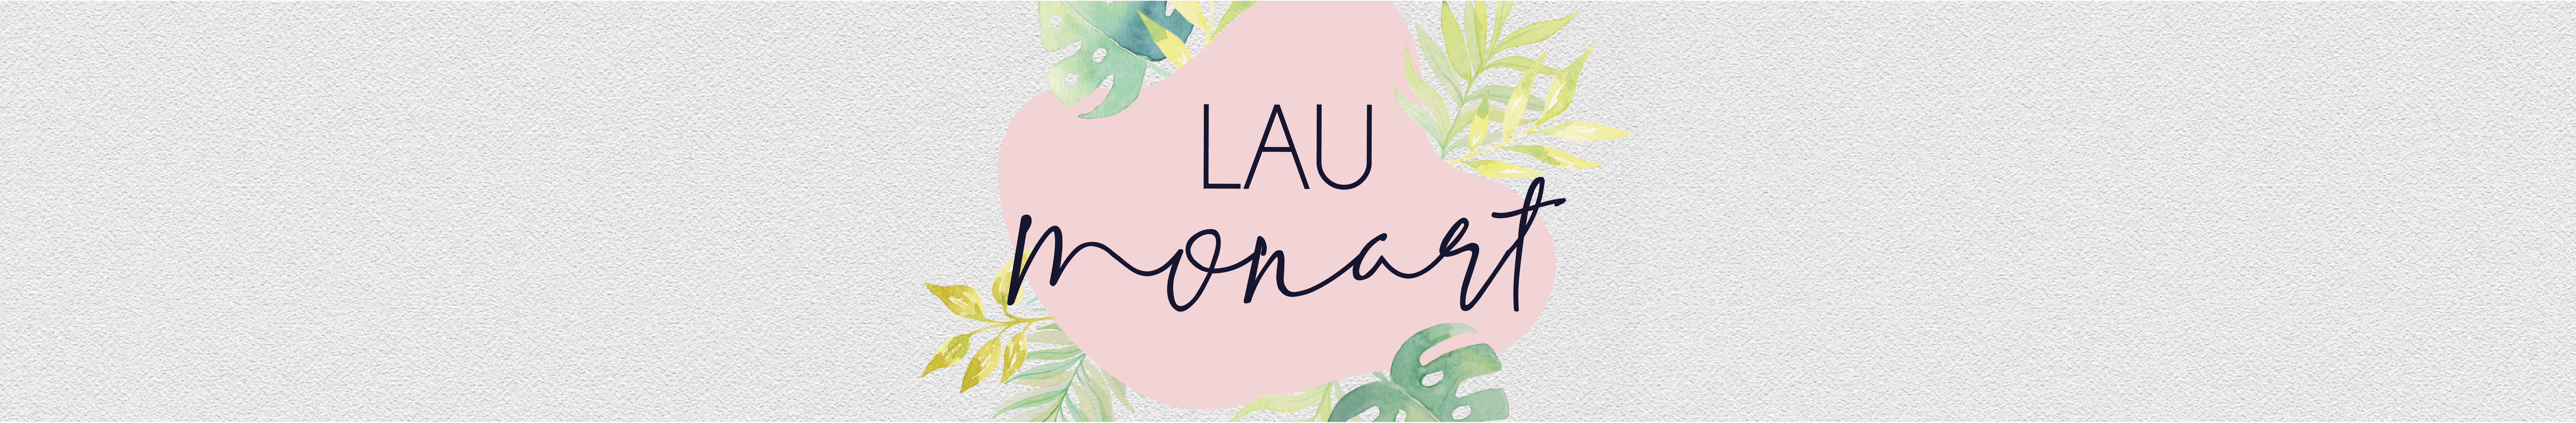 Laura Jaimes P's profile banner